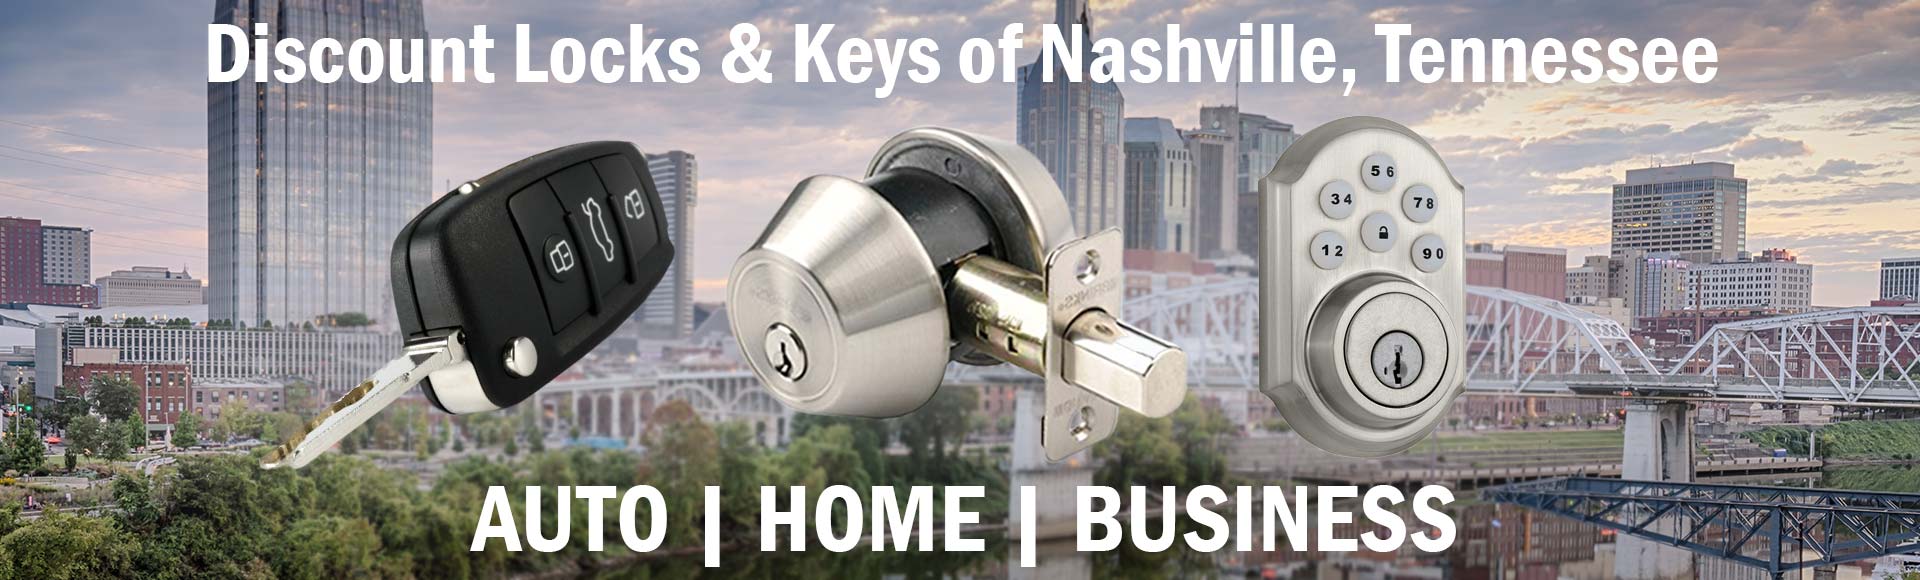 Discount Locks and Keys Nashville